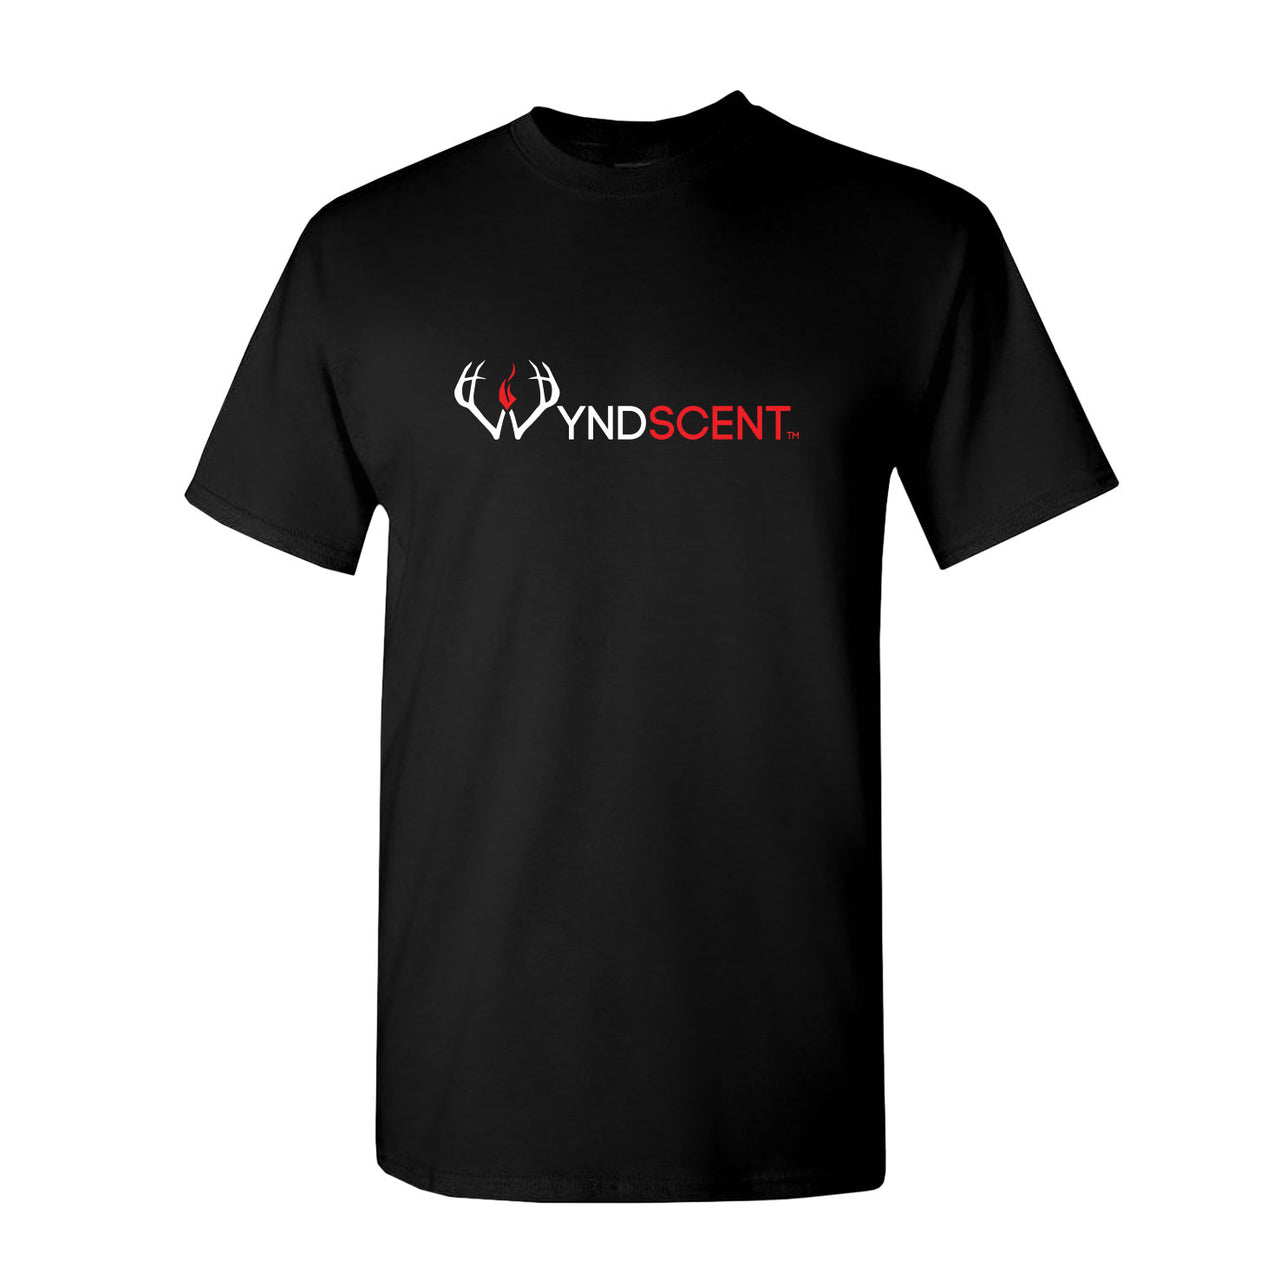 Wyndscent Black T-shirt